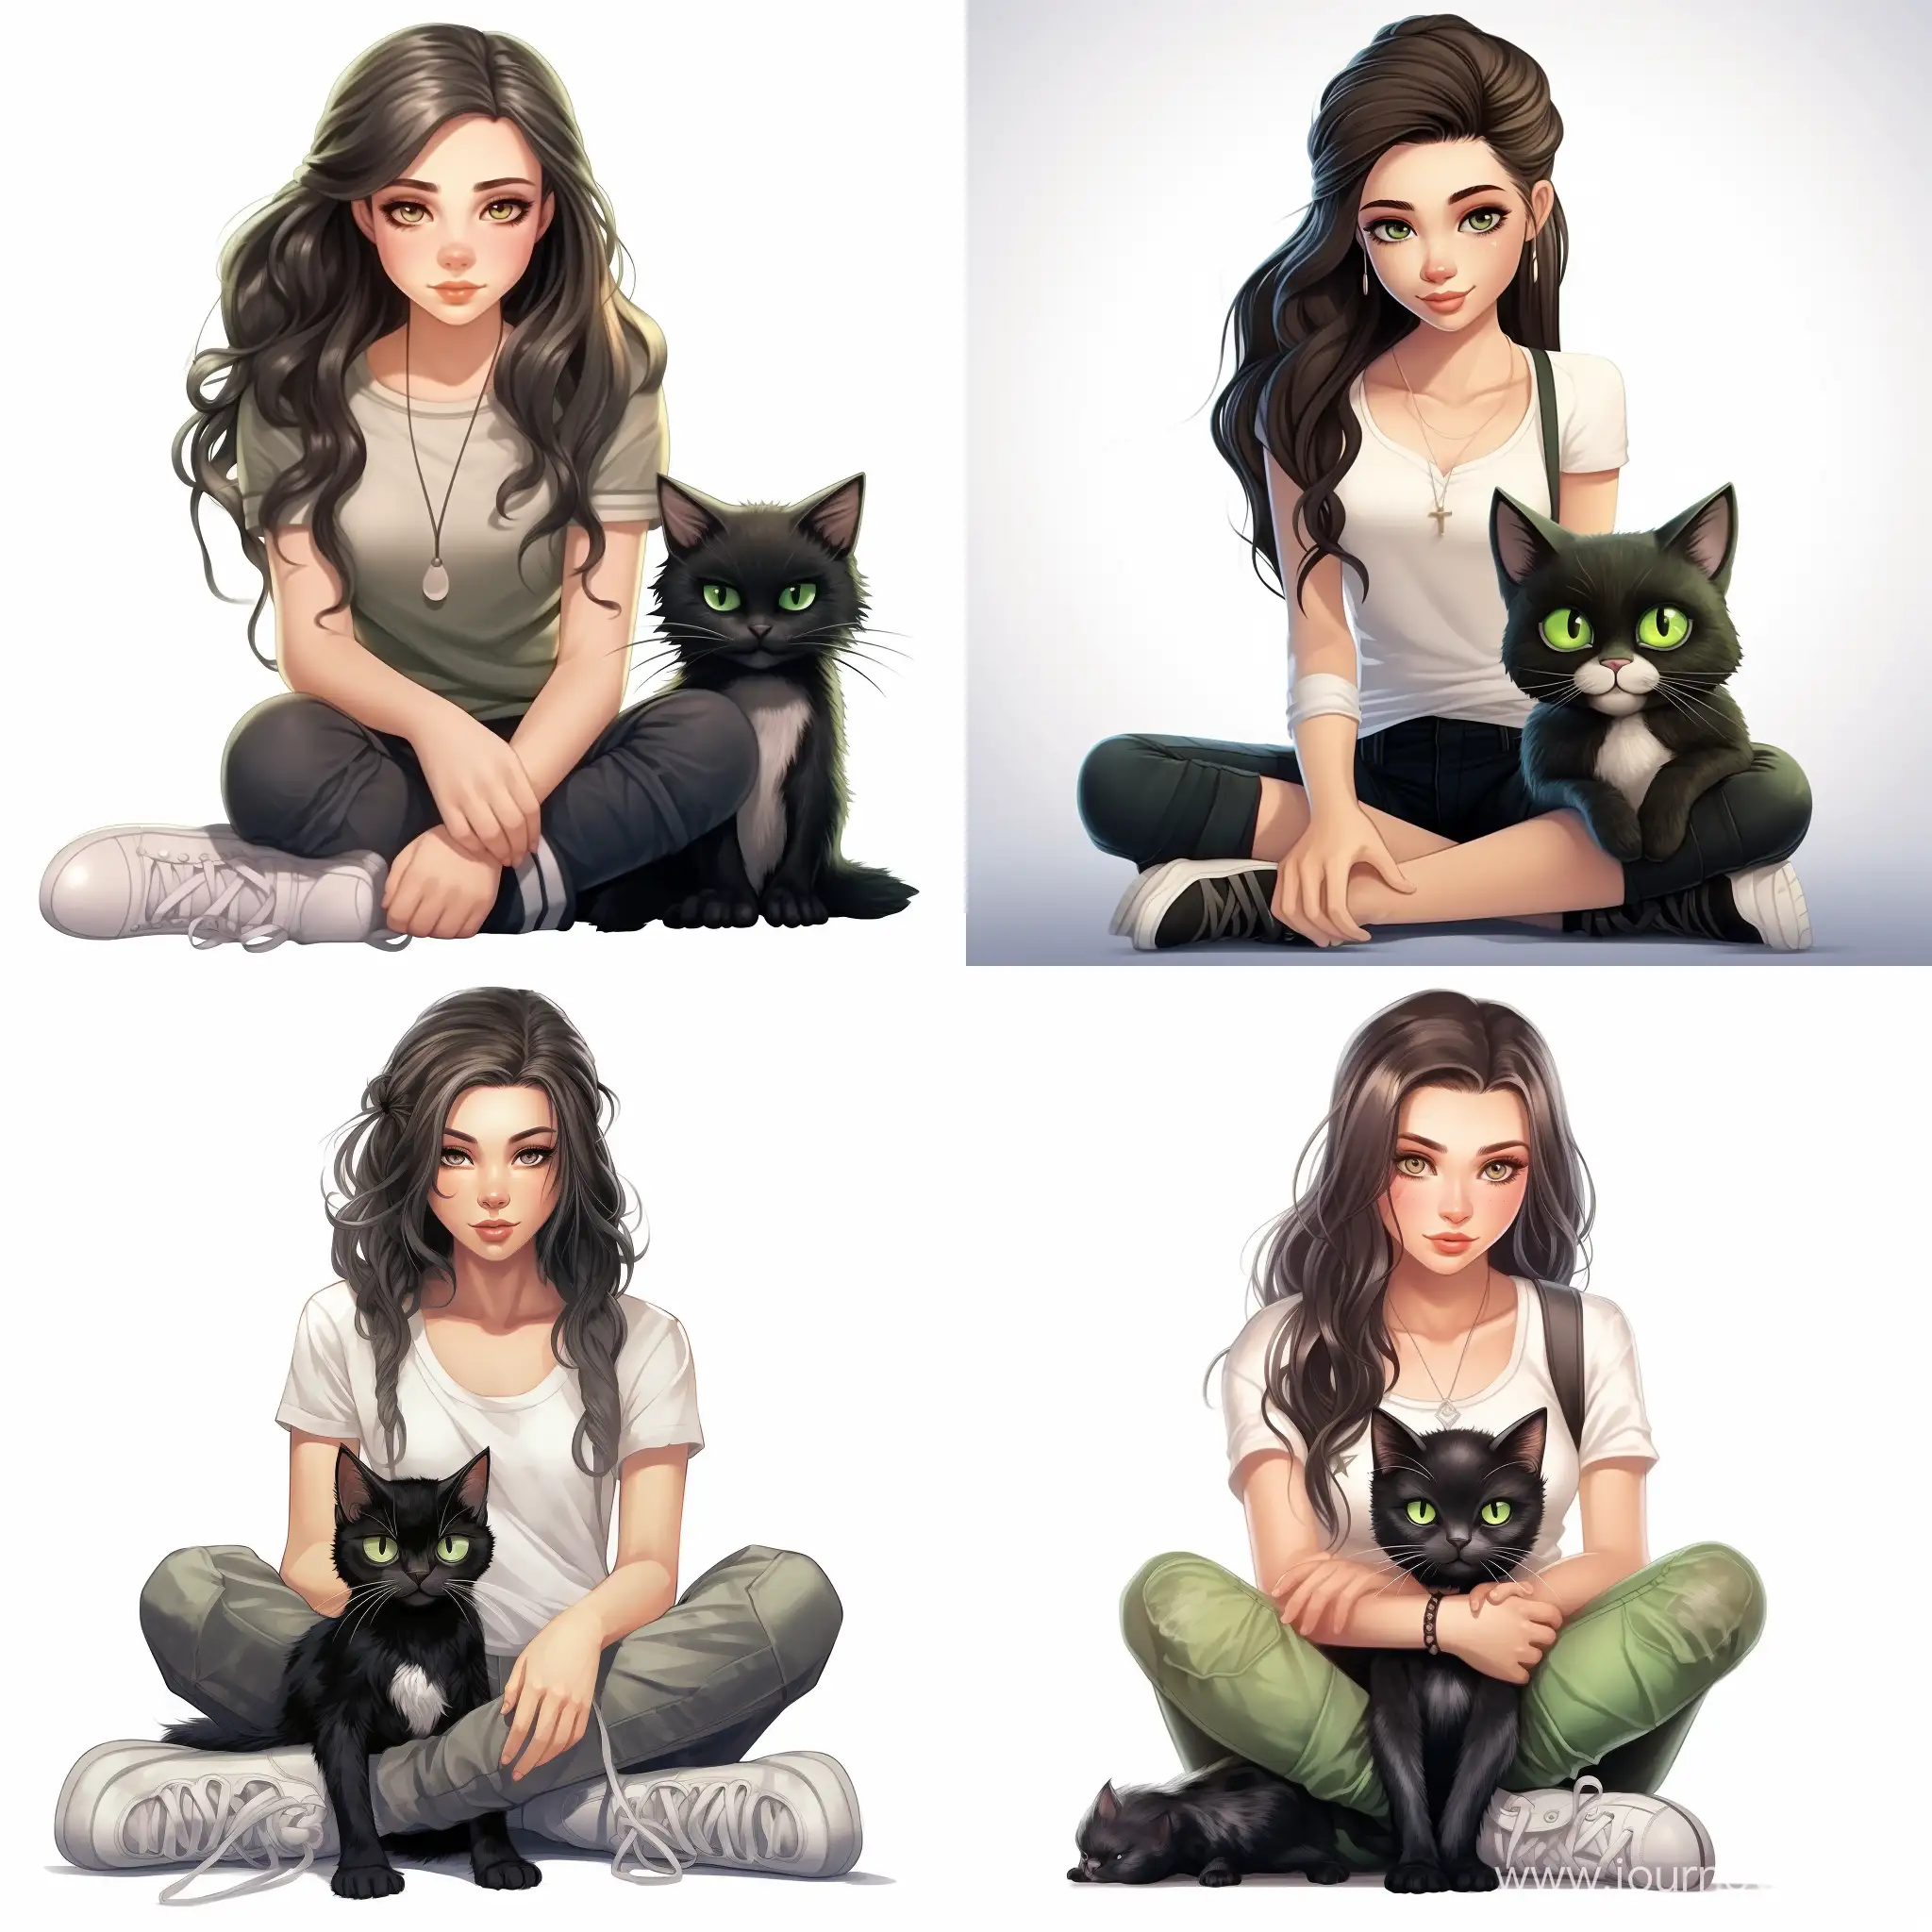 Expressive-Teen-Girl-with-Black-Cat-in-High-Detail-Cartoon-Art